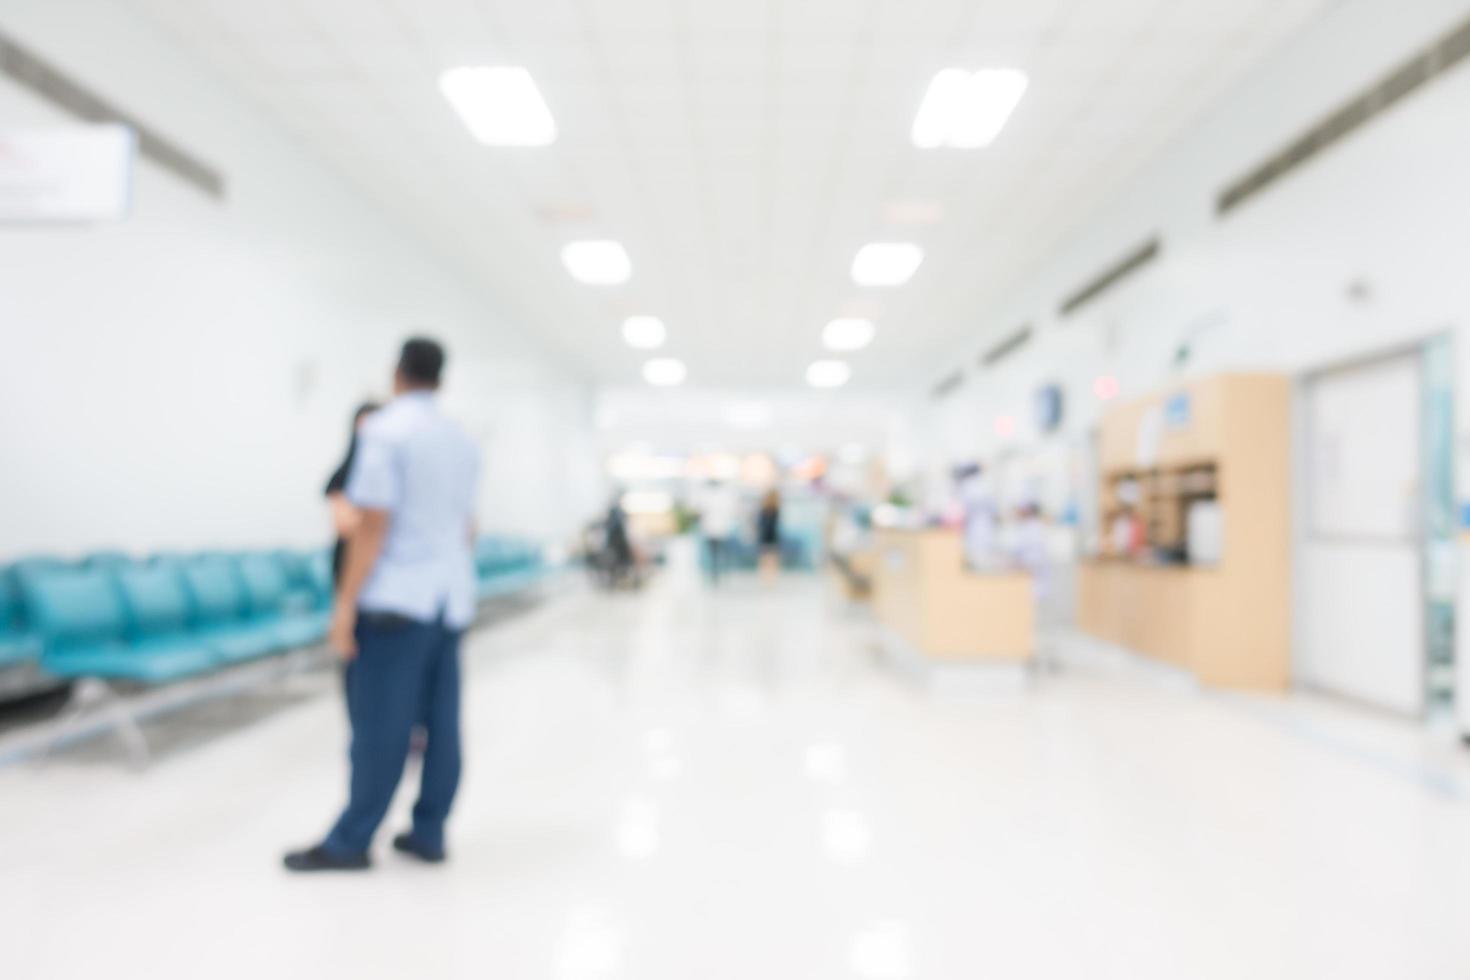 Blur hospital background photo